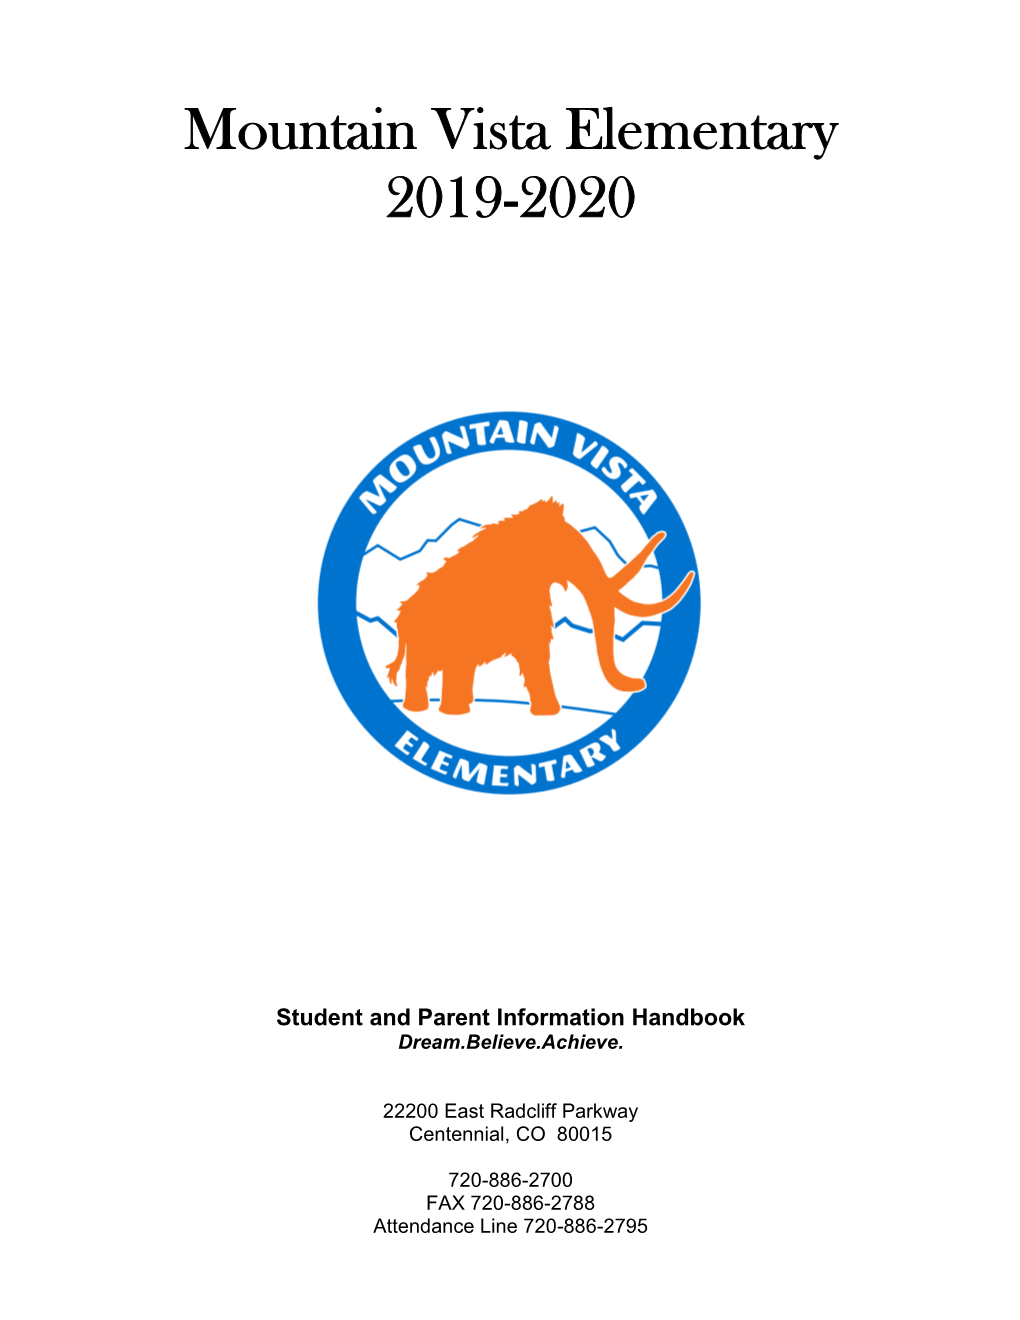 Mountain Vista Elementary 2019-2020